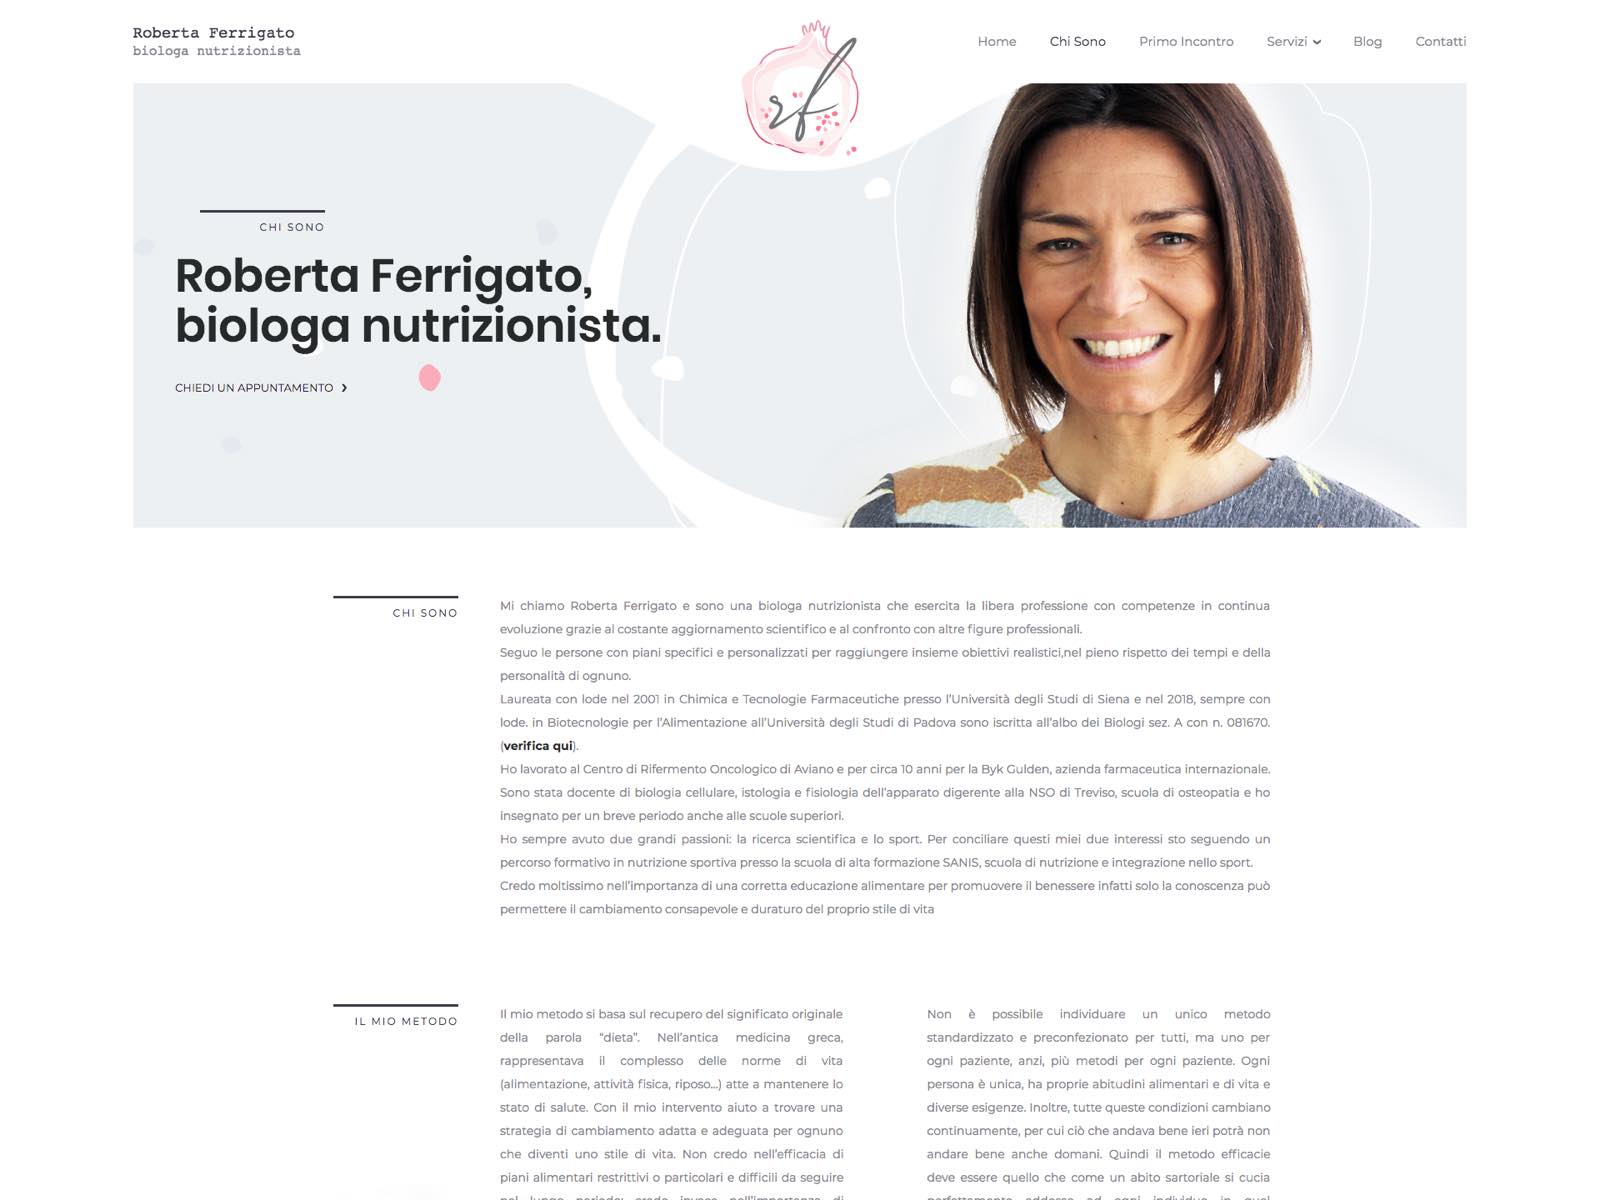 Roberta Ferrigato about page